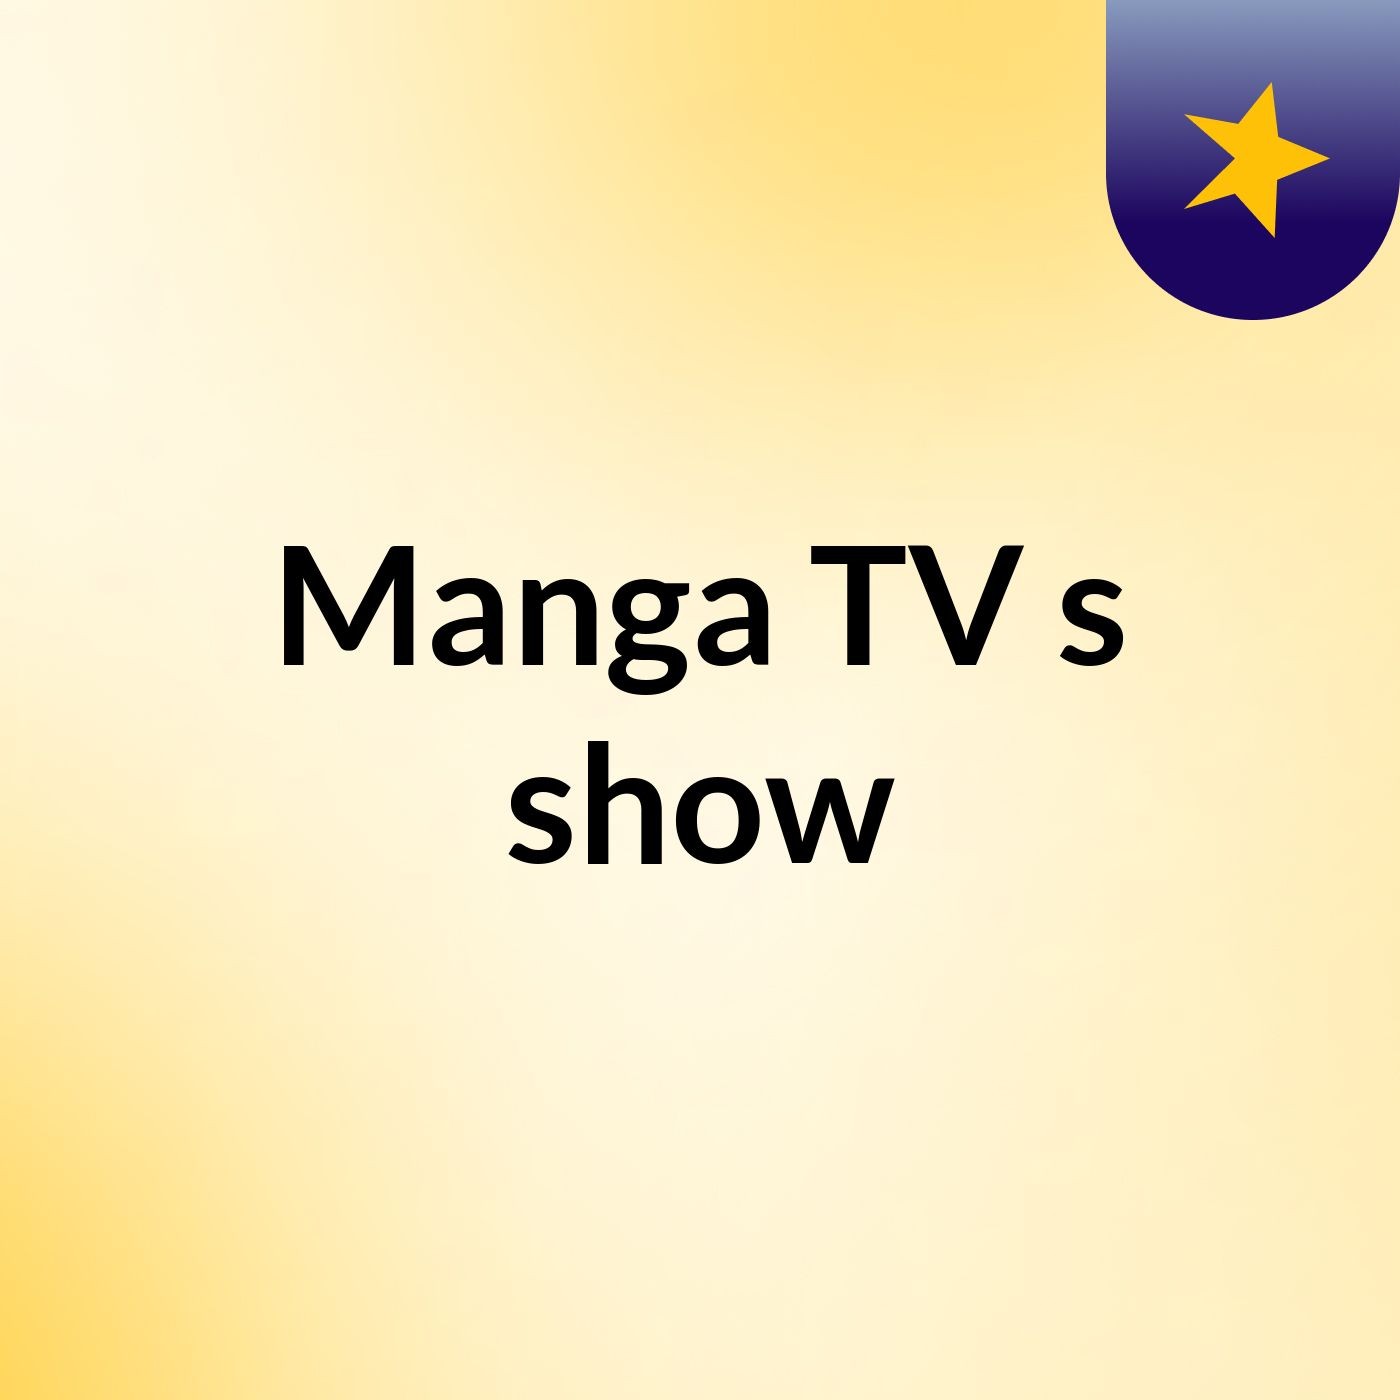 Manga TV's show